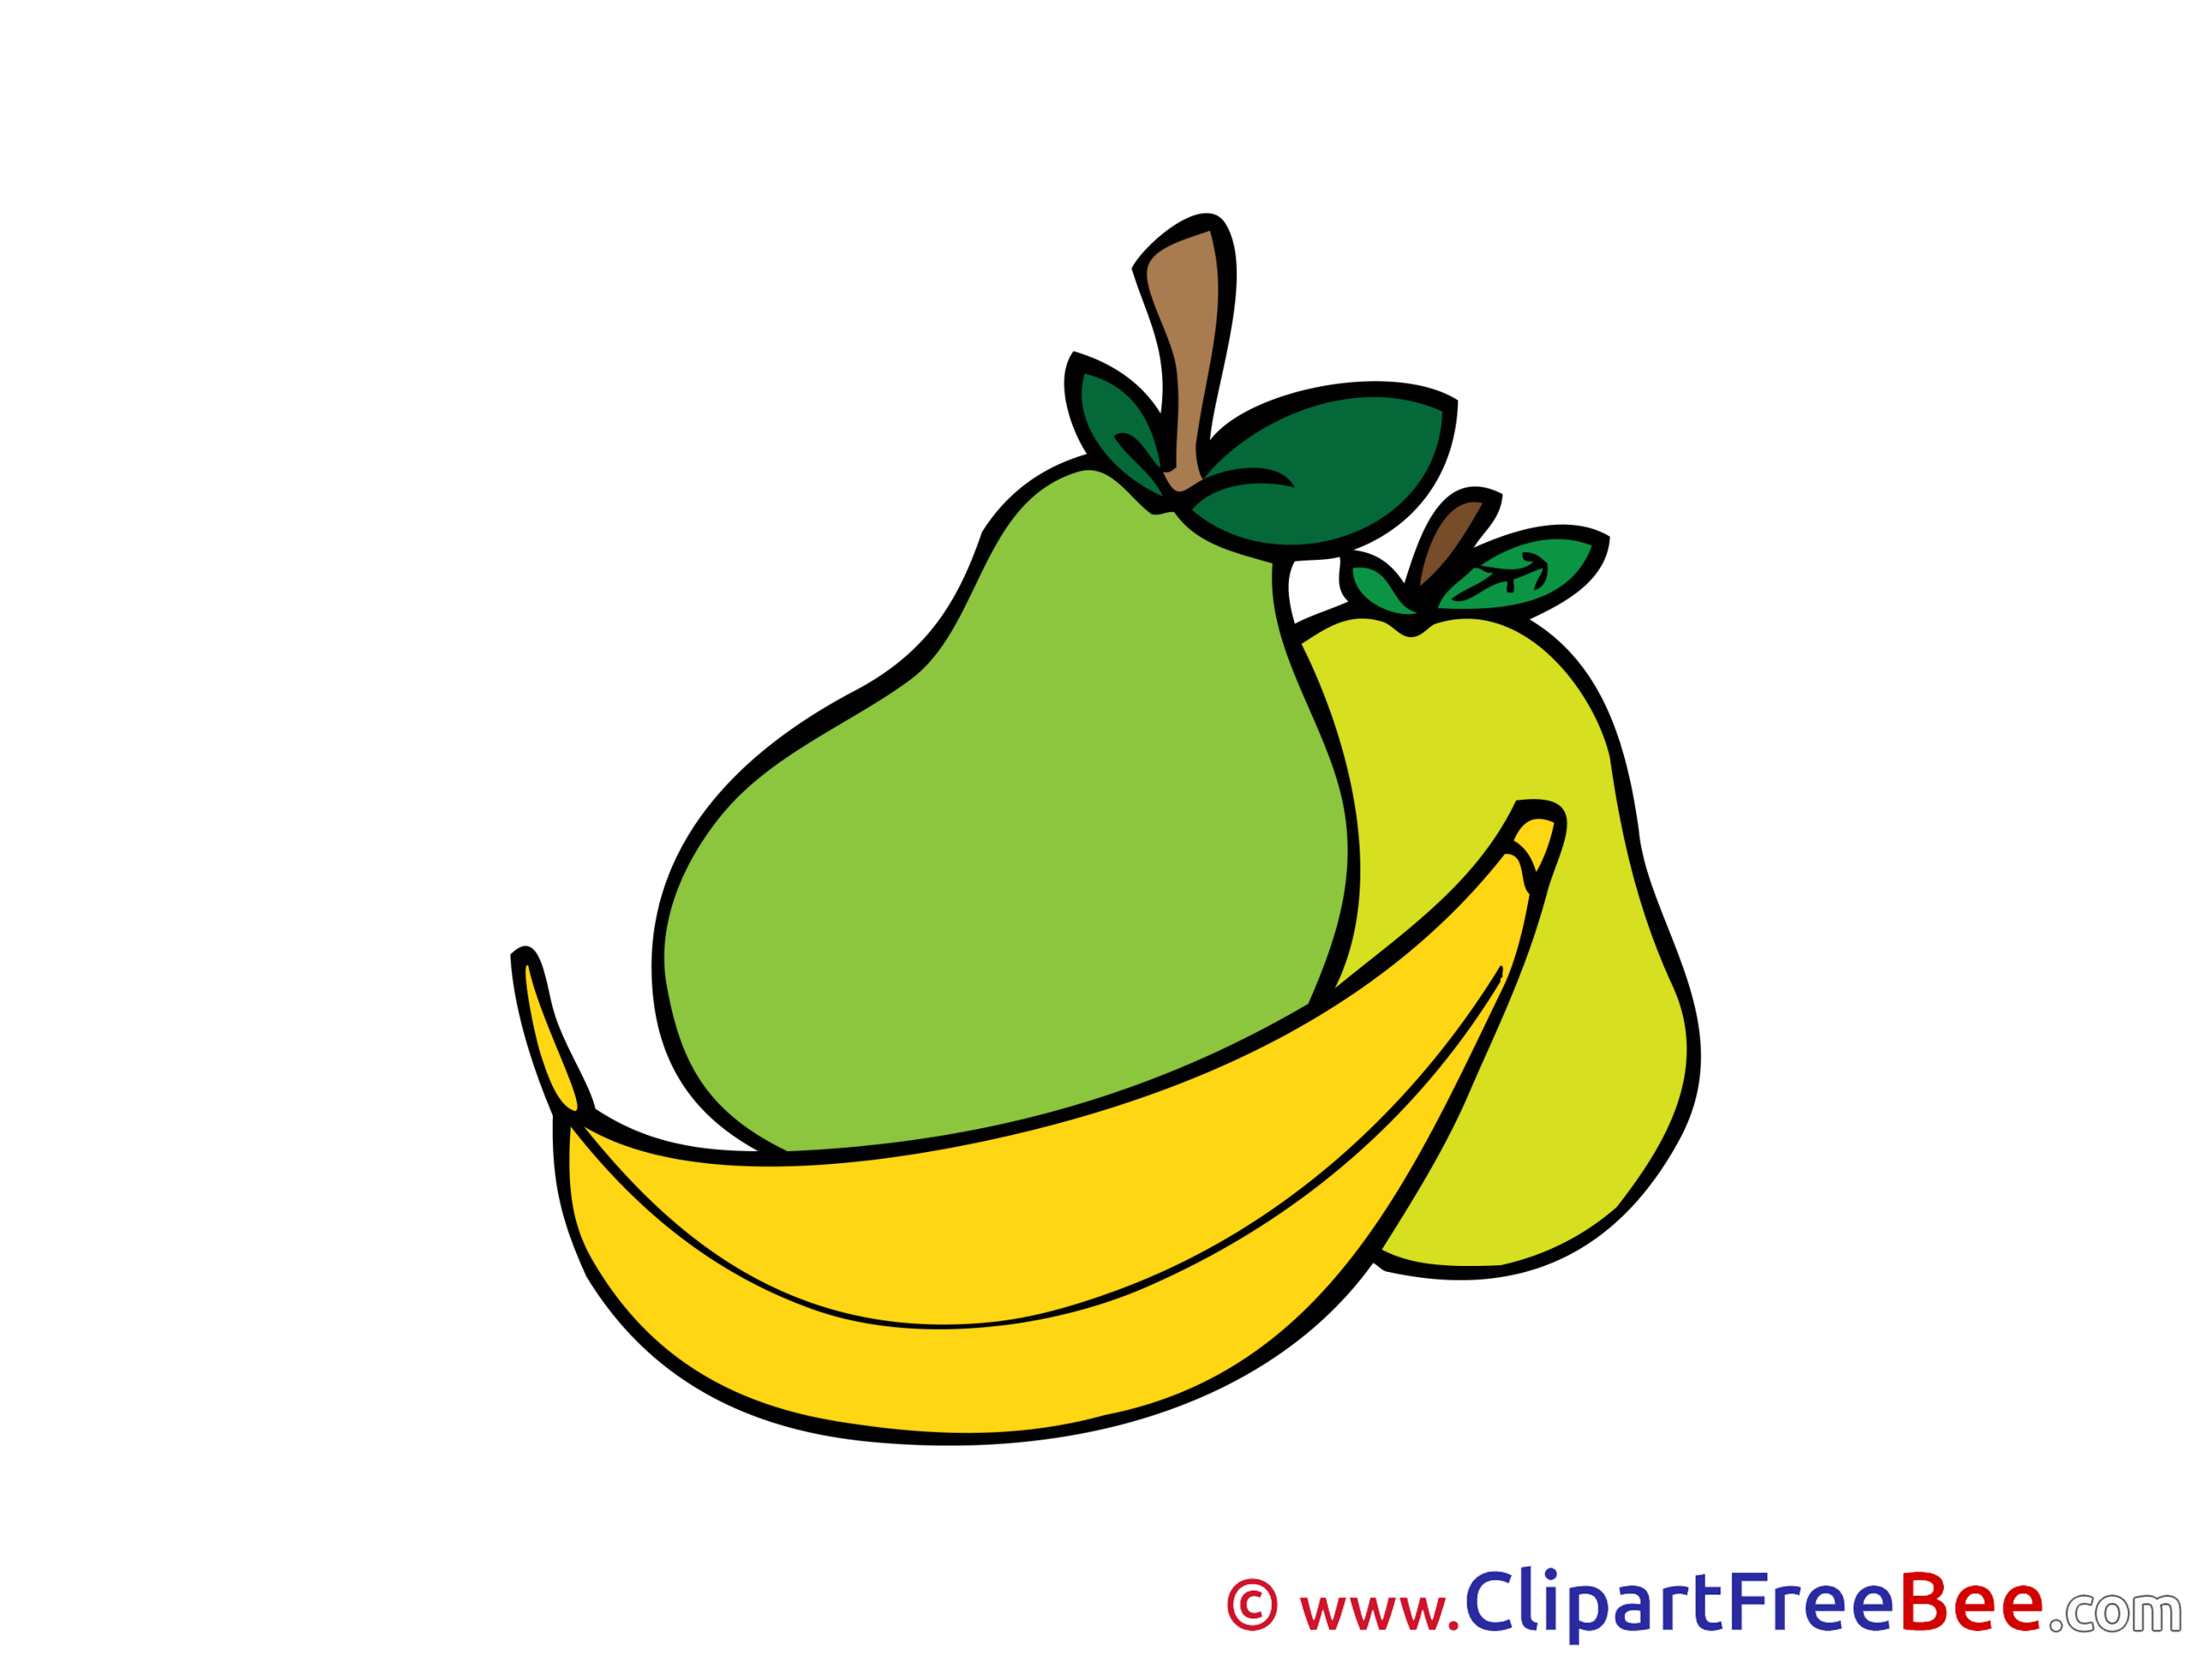 Fruits free Illustration download